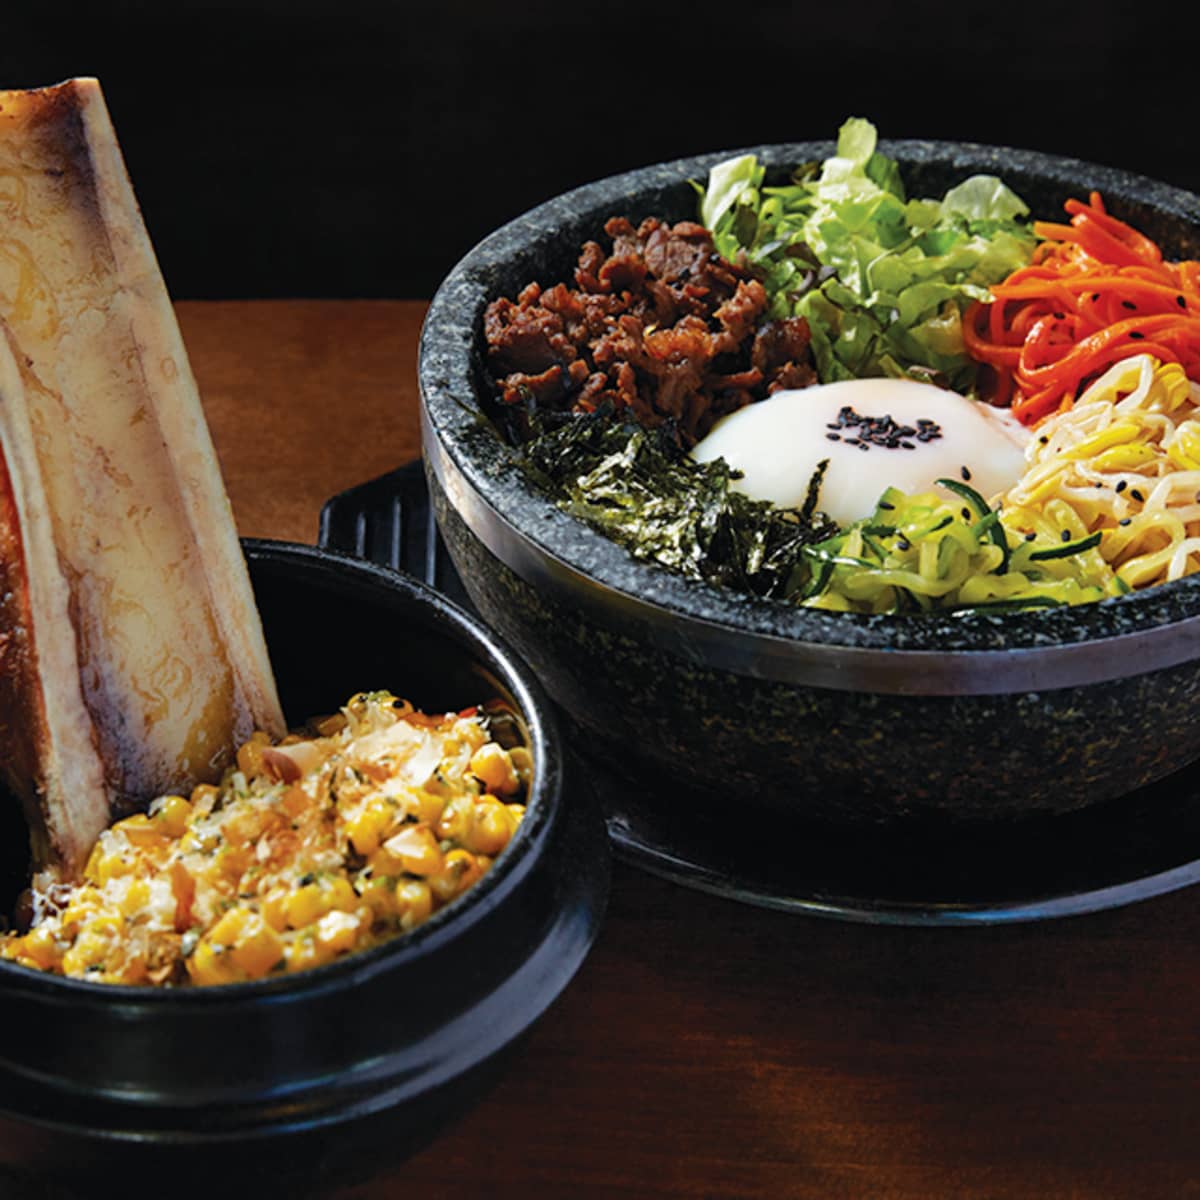 Rising Grill Korean BBQ: Raising the bar on Korean food in